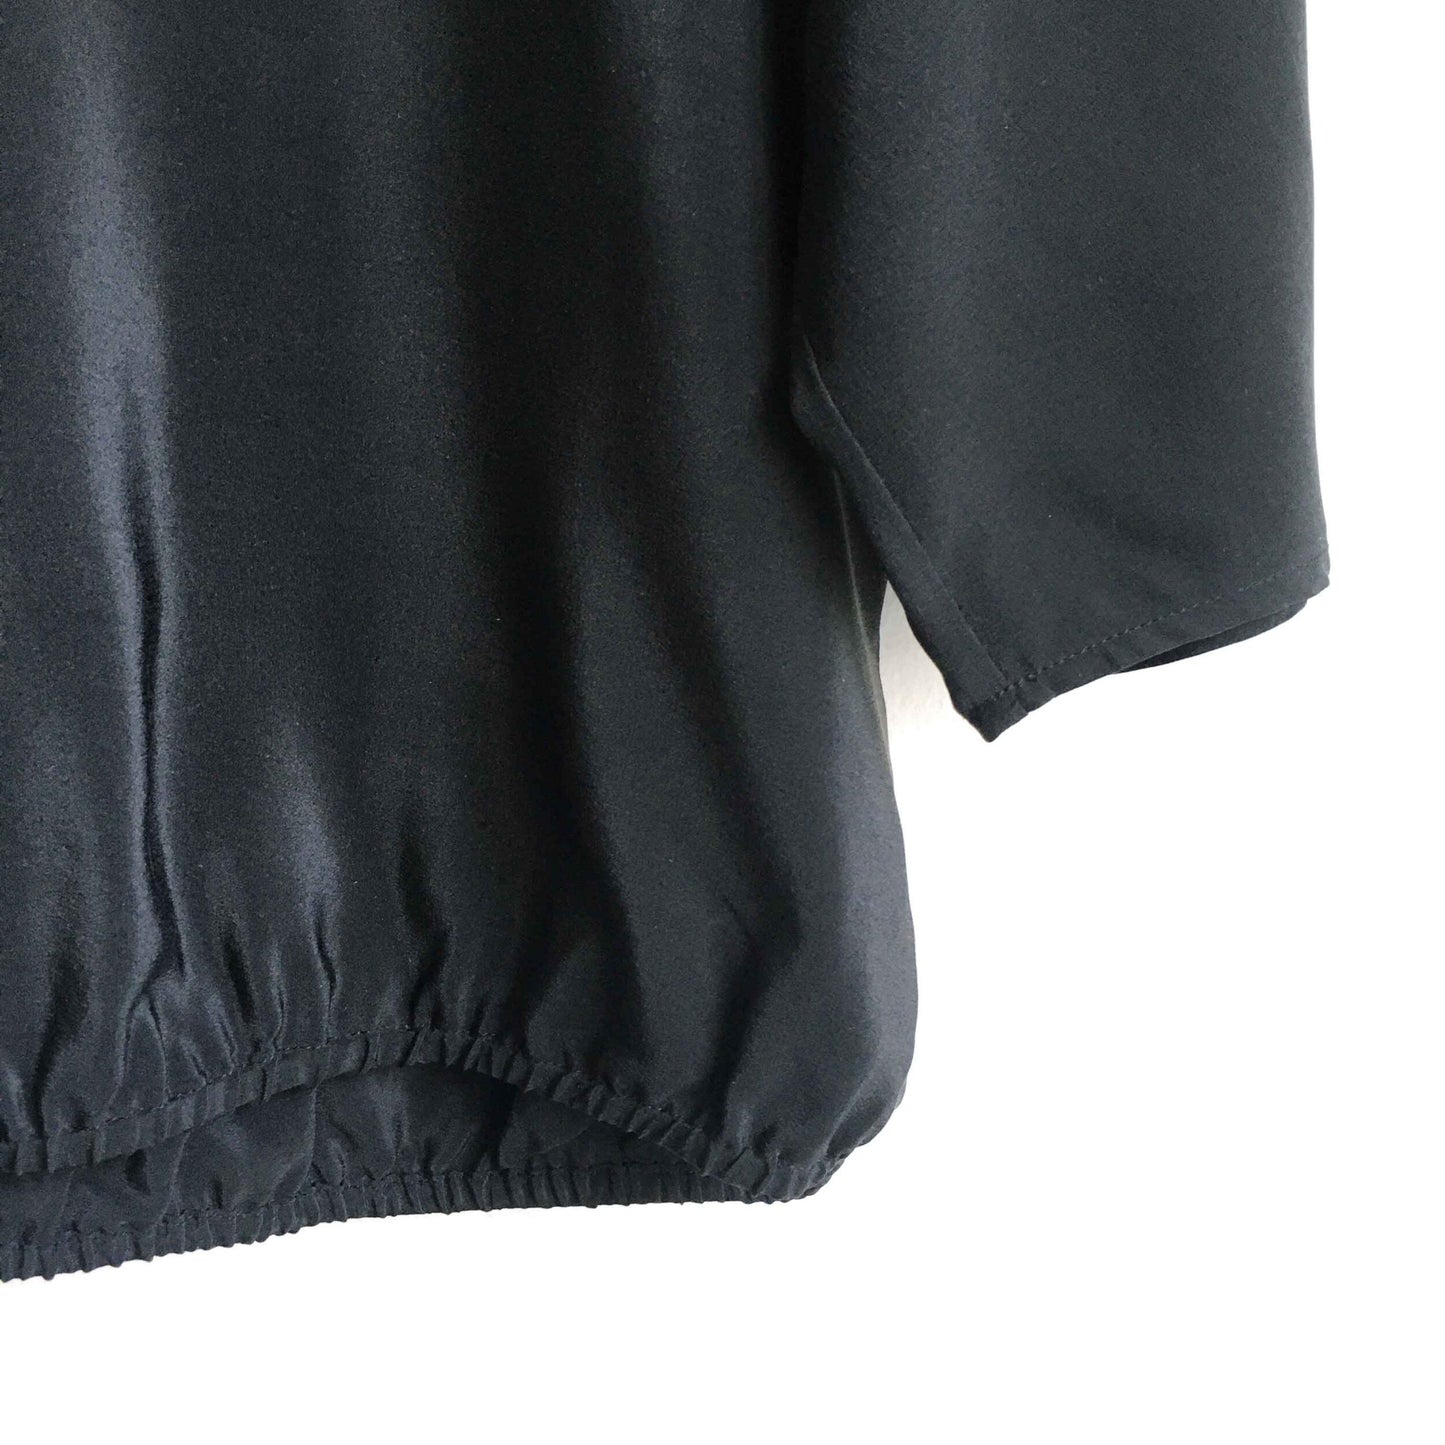 Joie silk wrap blouse - size Large